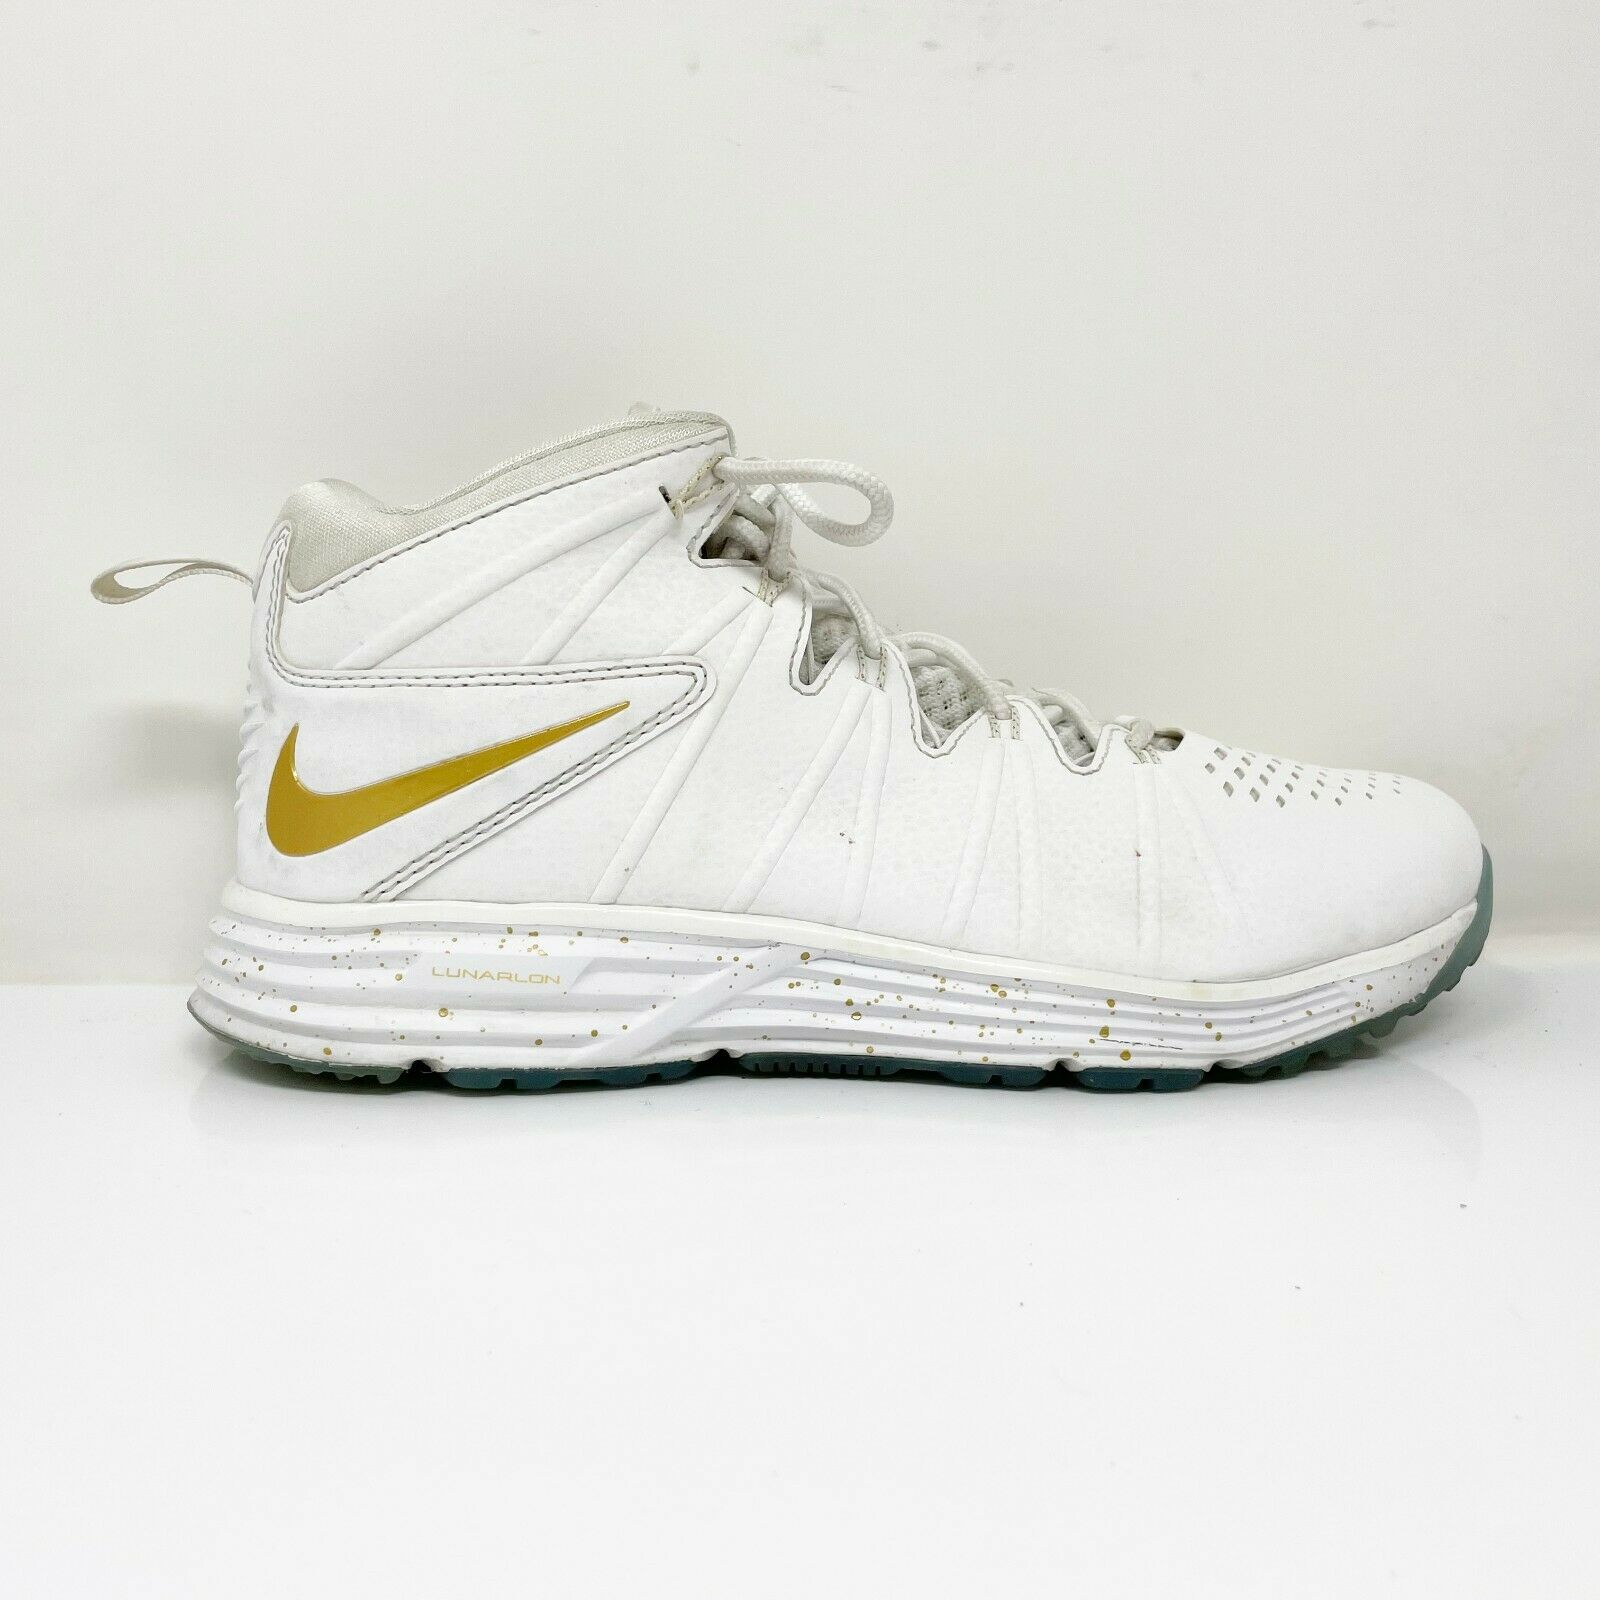 Nike Mens Huarache 4 684699-170 White Basketball Shoes Sneakers Size 8